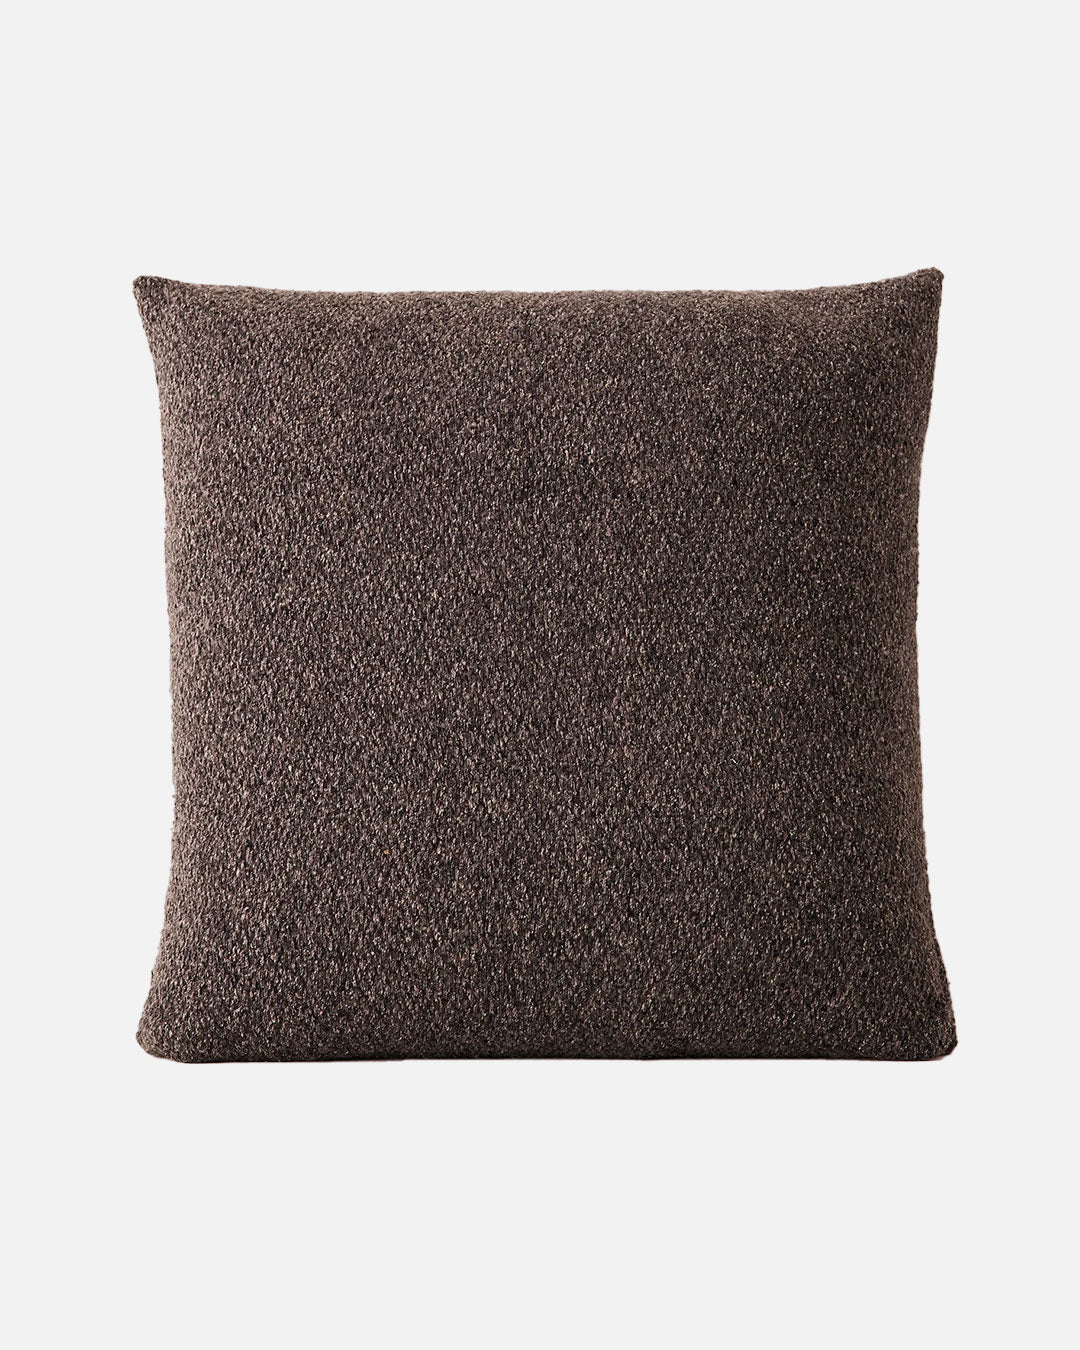 Urano Large Square Cushion Cover in Dark Grey